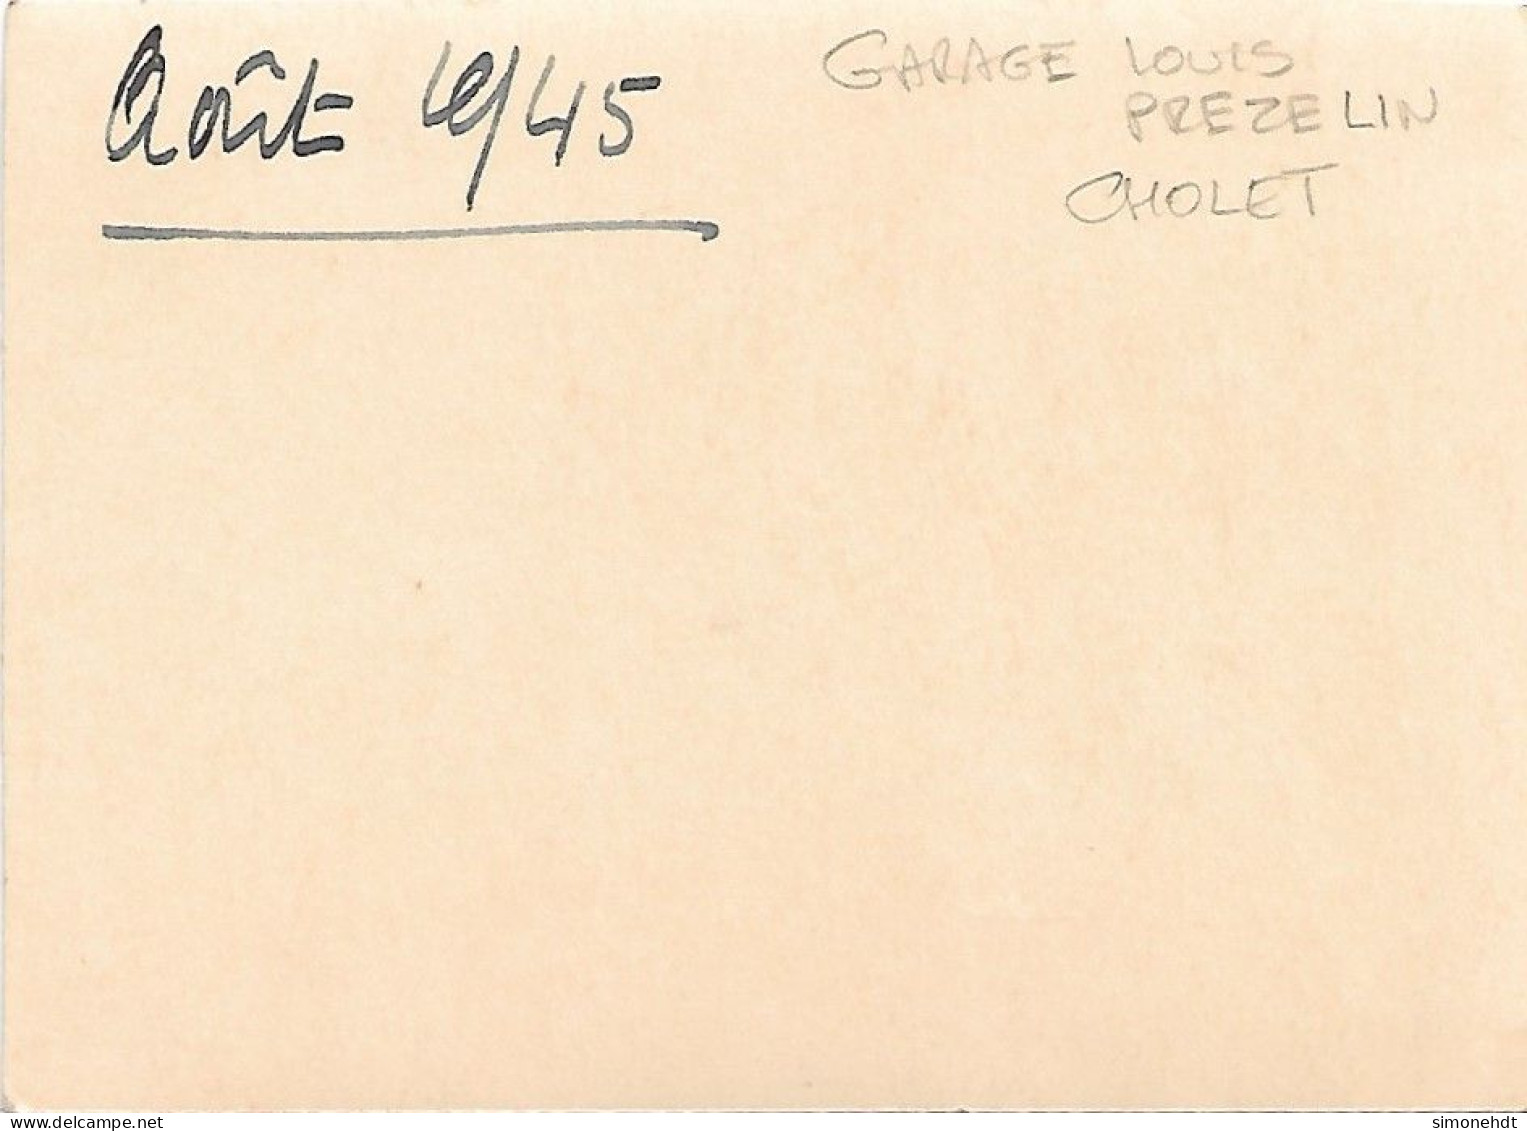 CHOLET - Photo ( 11,5 Cm X 8,5 ) - Garage Louis  PREZELIN En 1945 - Cholet